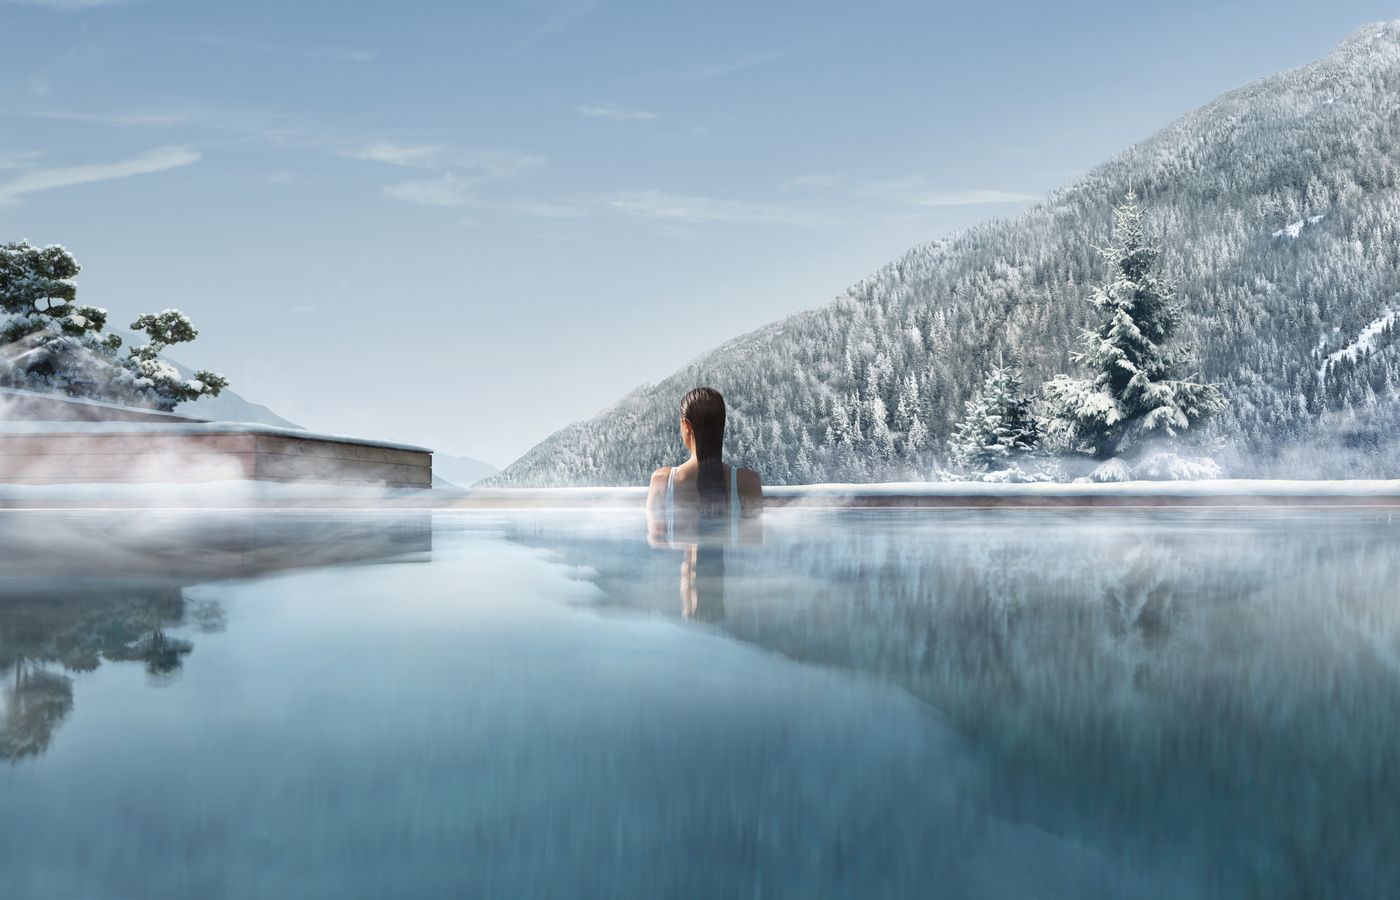 Trip La Palma - FitReisen - Lefay Resort & Spa Dolomiti in Pinzolo buche jetzt Deinen Wellness & Beauty Urlaub im Lefay Resort & Spa Dolomiti in der Region Südtirol, in Italien günstig bei uns!